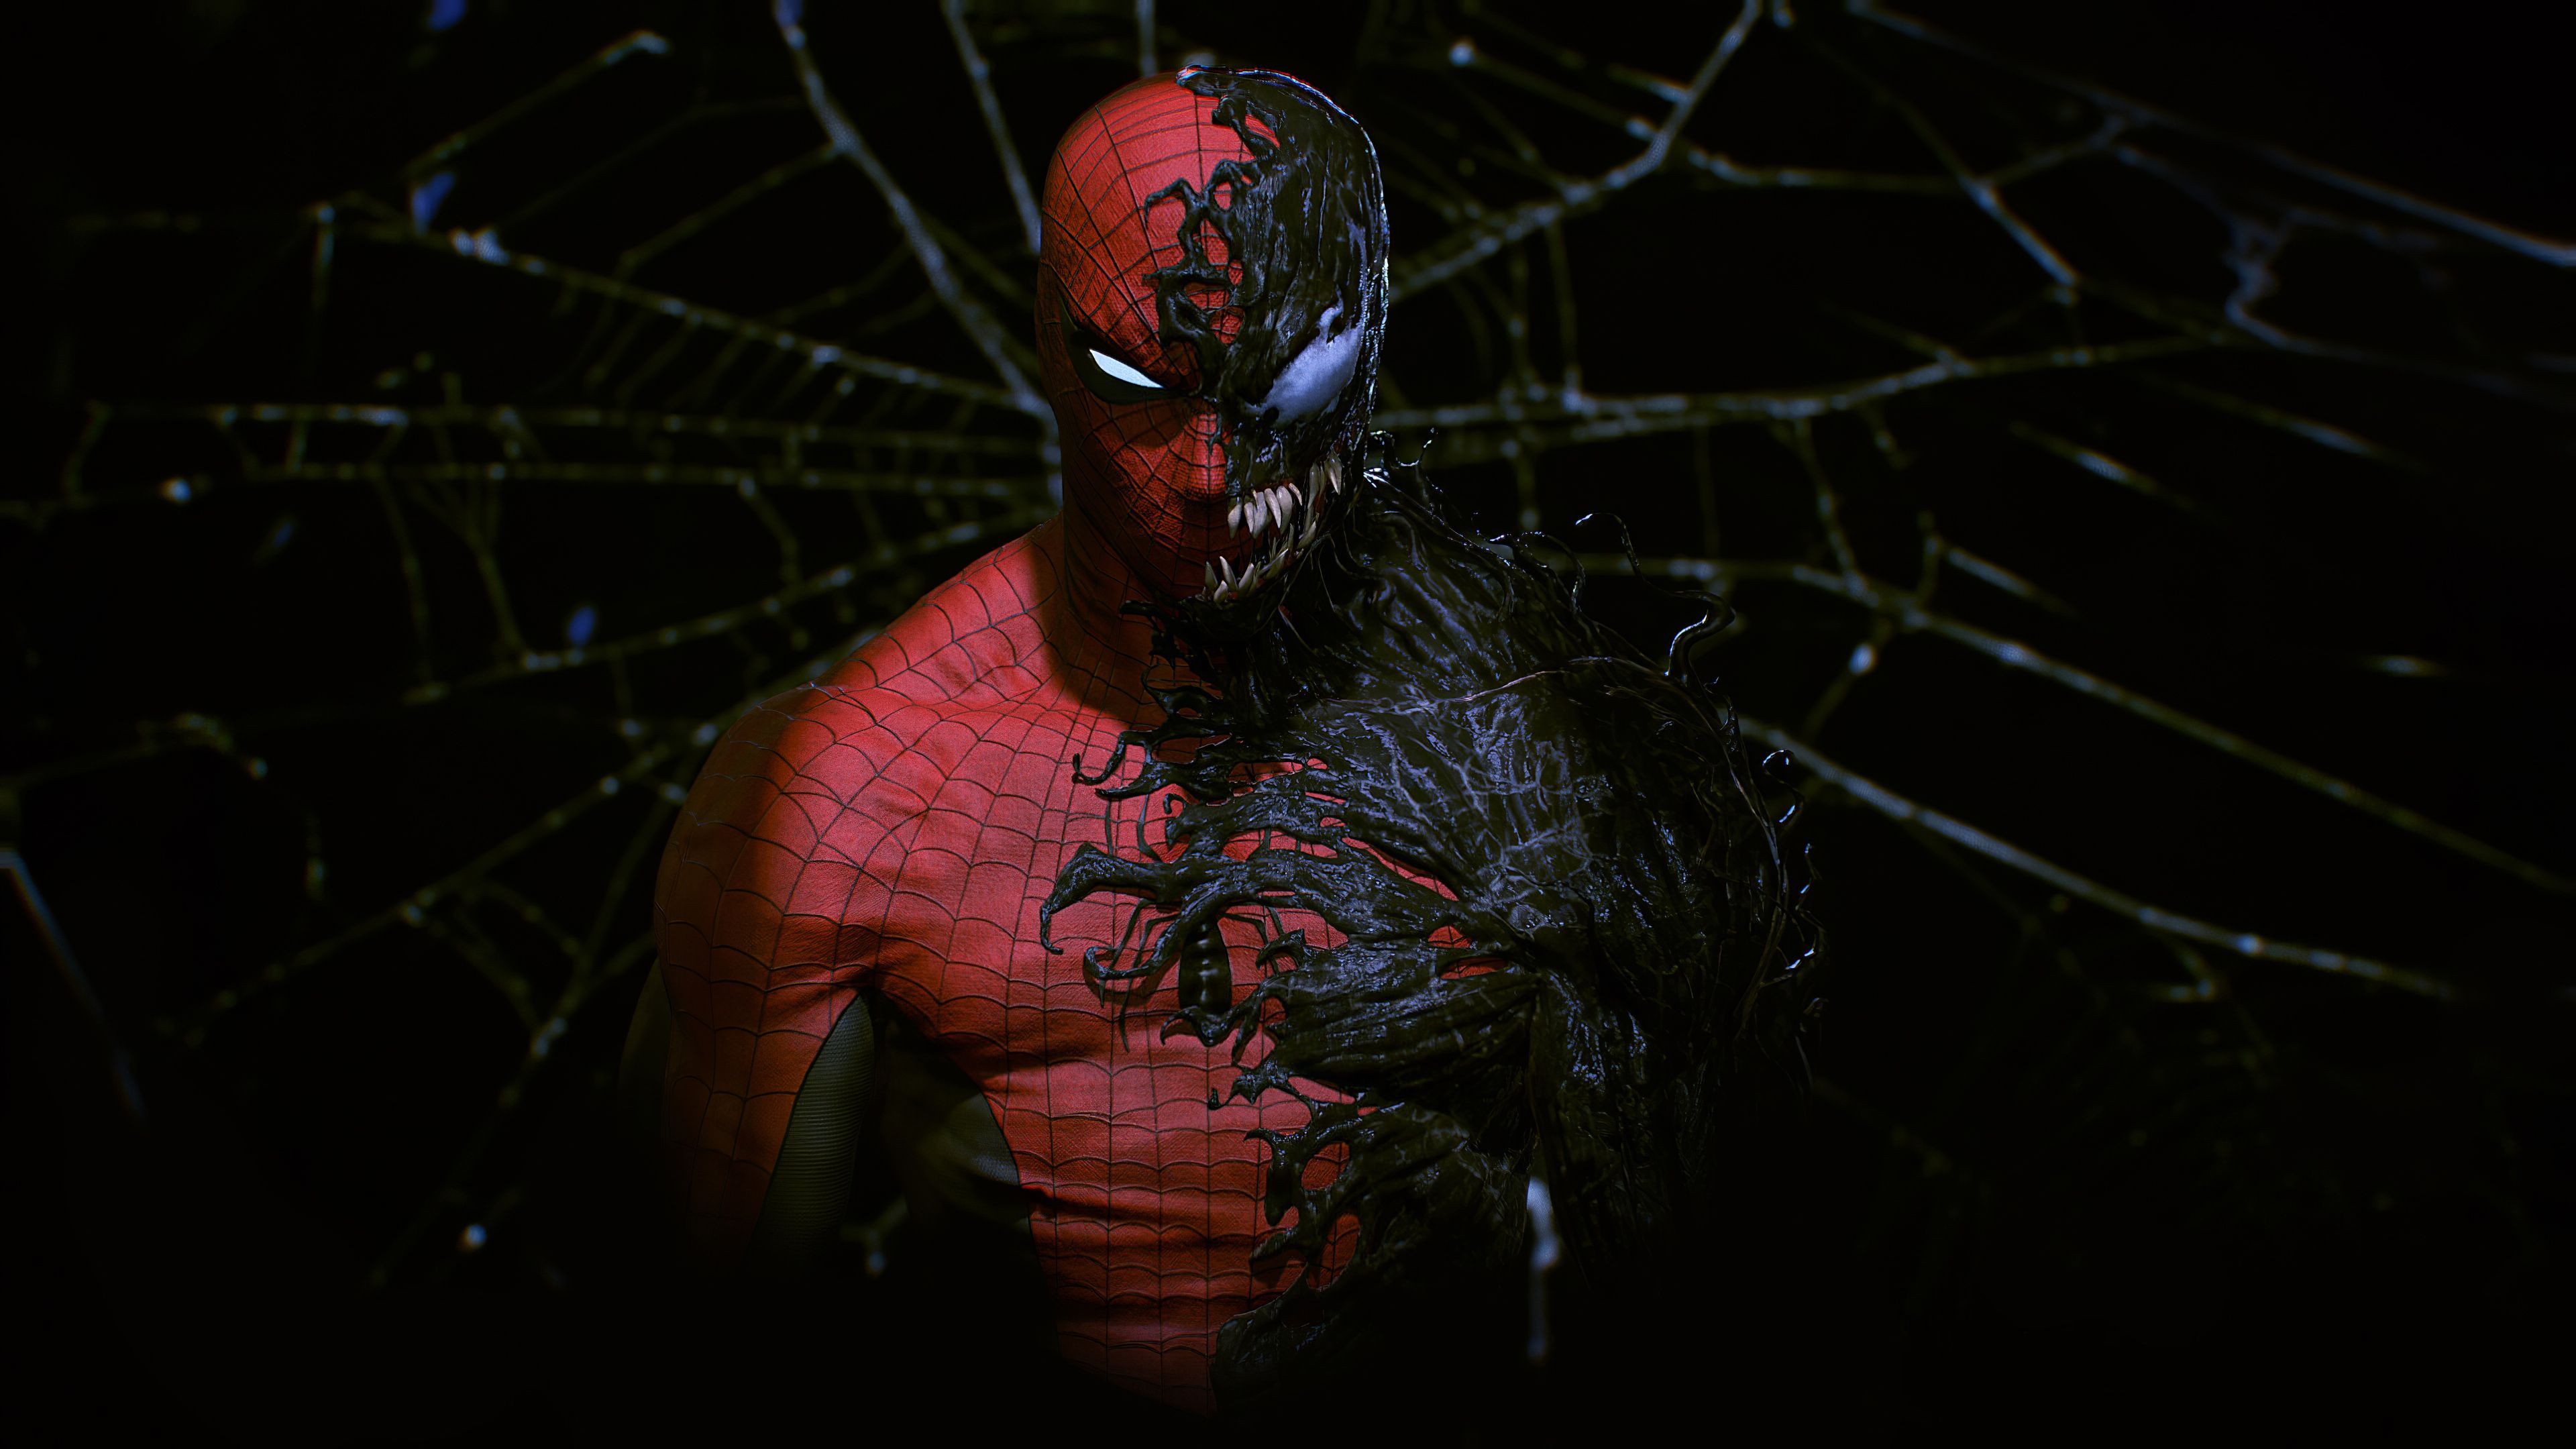 Spider Man 4K Wallpaper, Venom, Black Background, Marvel Superheroes, Marvel Comics, Graphics CGI